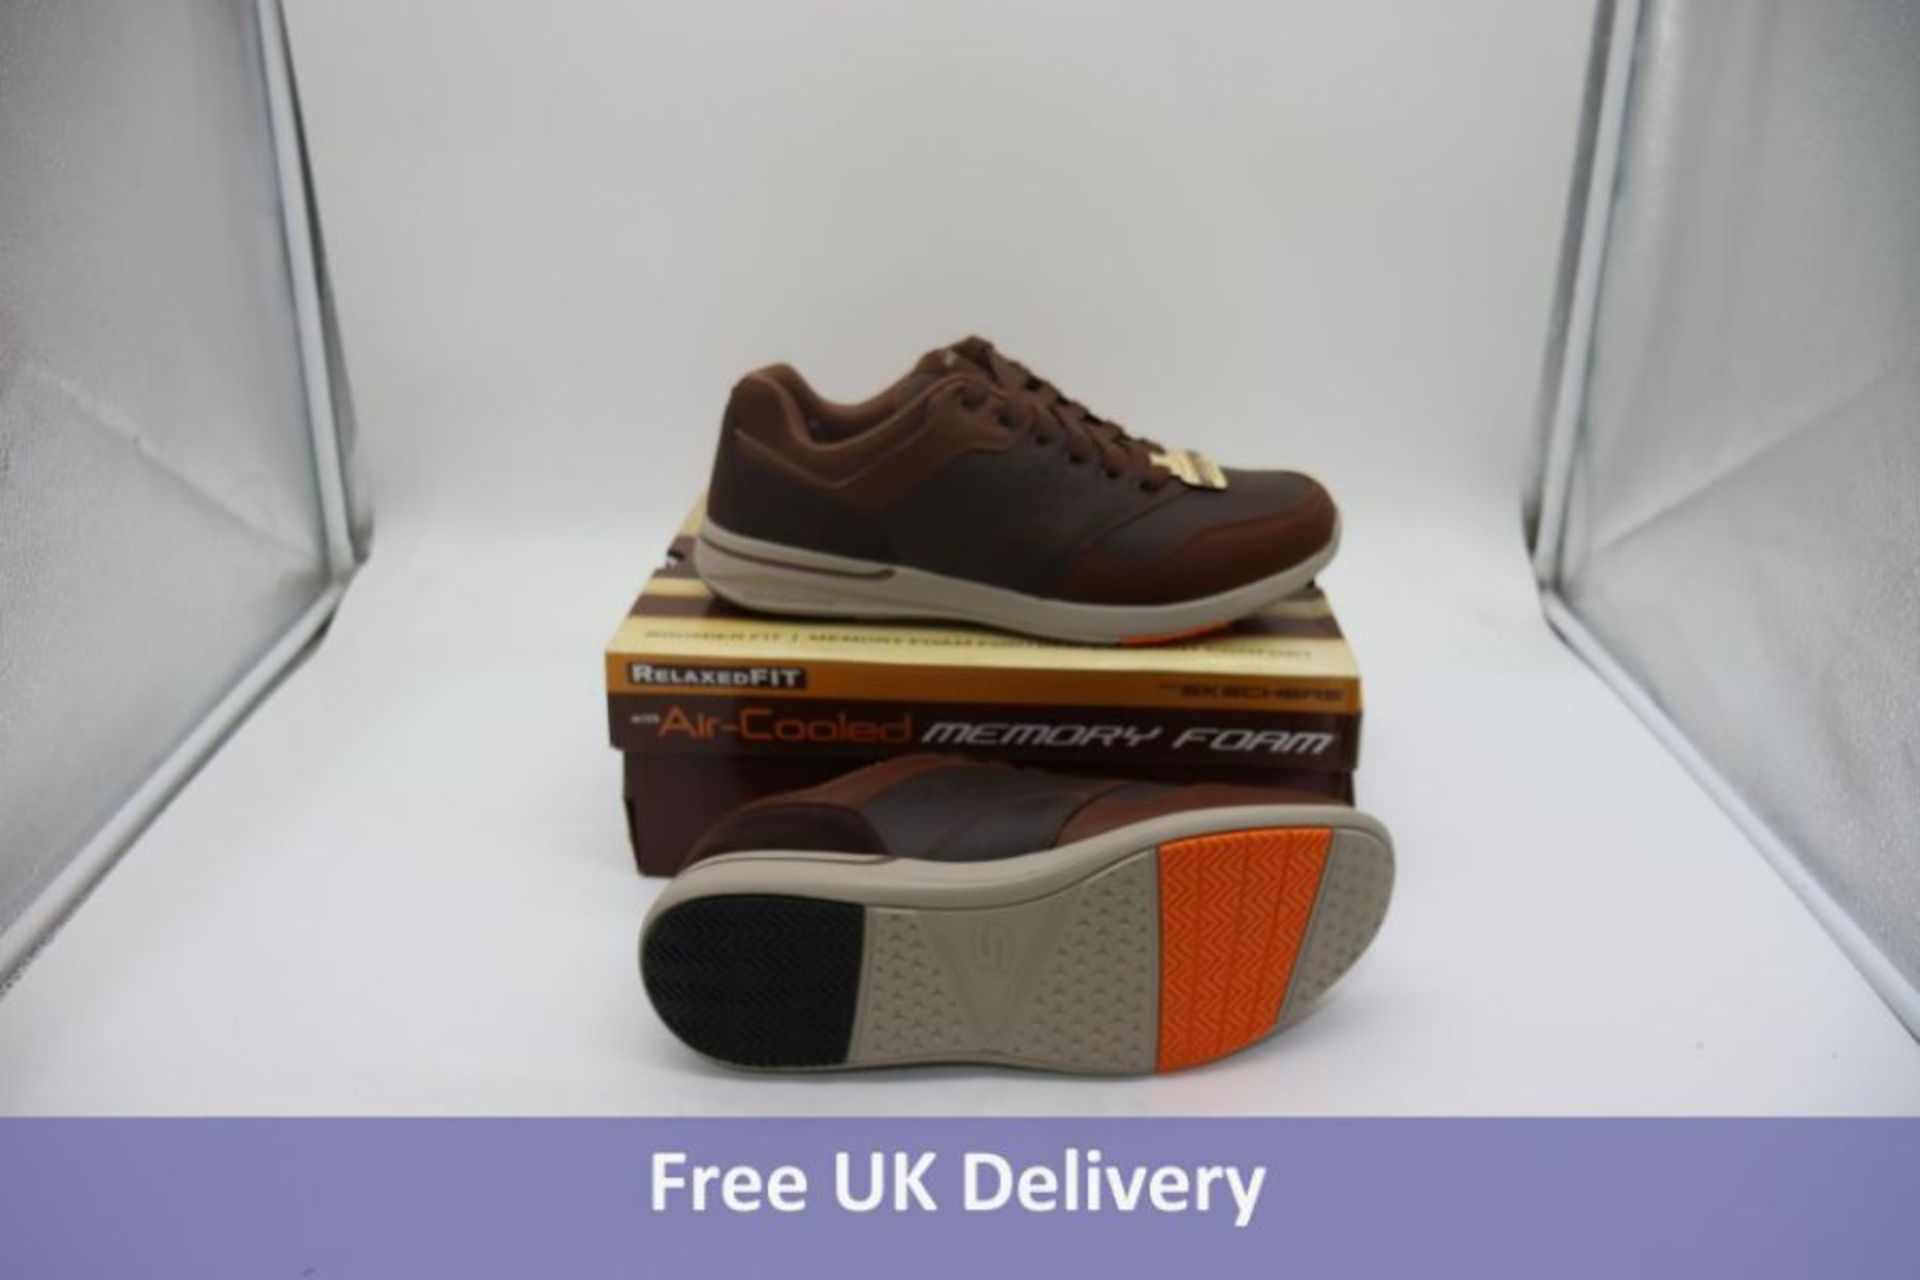 Skechers Men's Elent Velago Shoes, Brown, UK 10.5. Box damaged